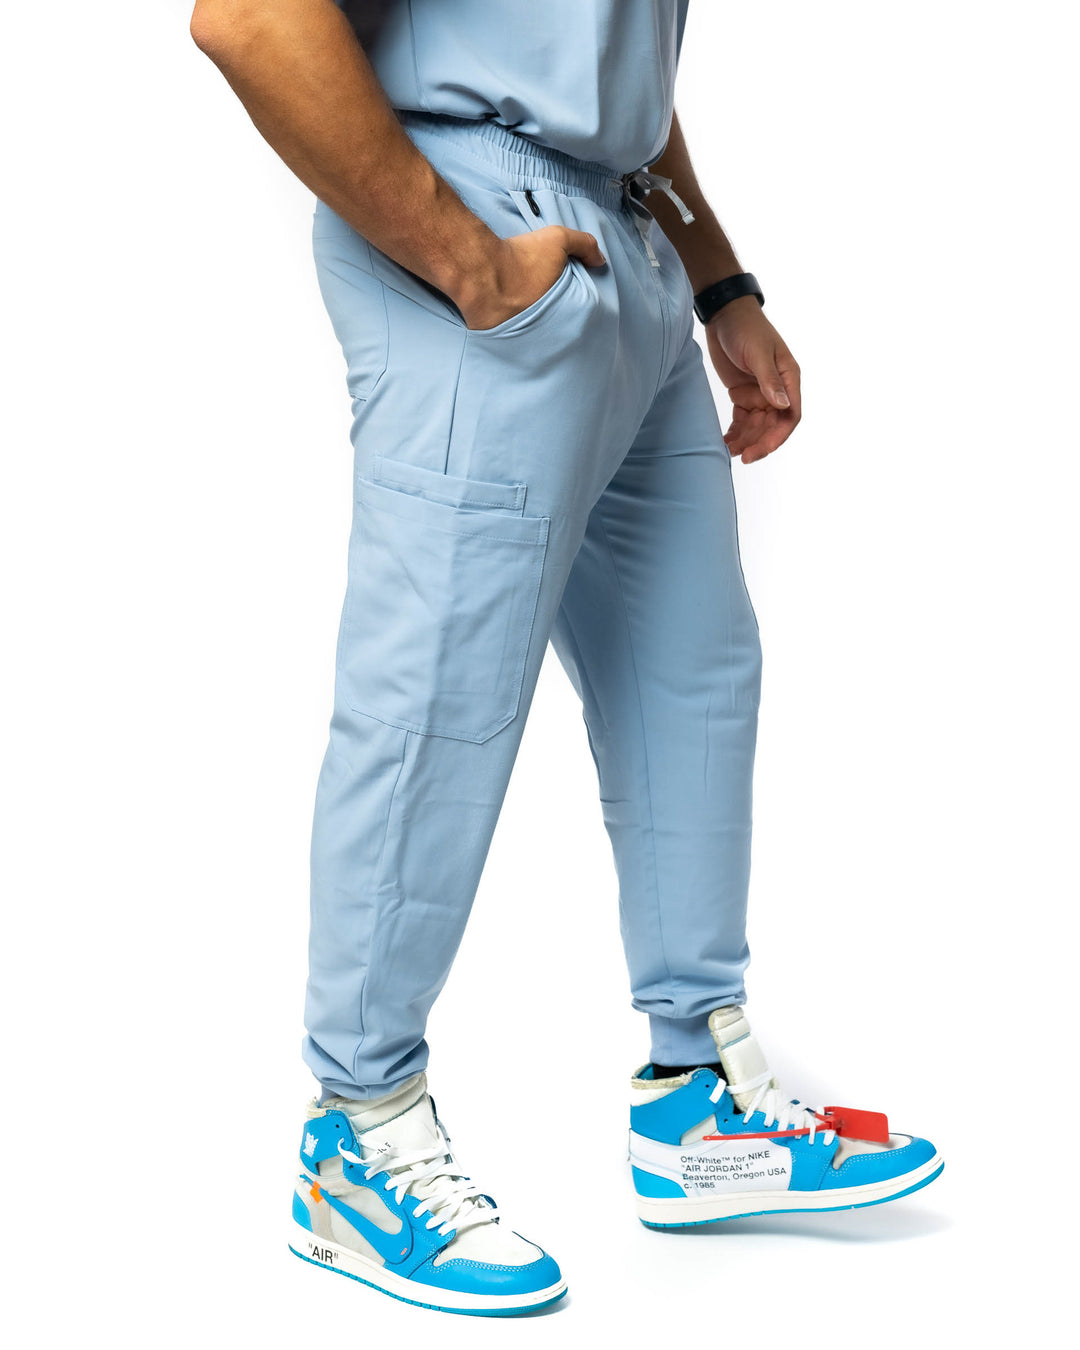 Men's Slate Blue Jogger Scrub Pants MimScrubs by Millennials in Medicine